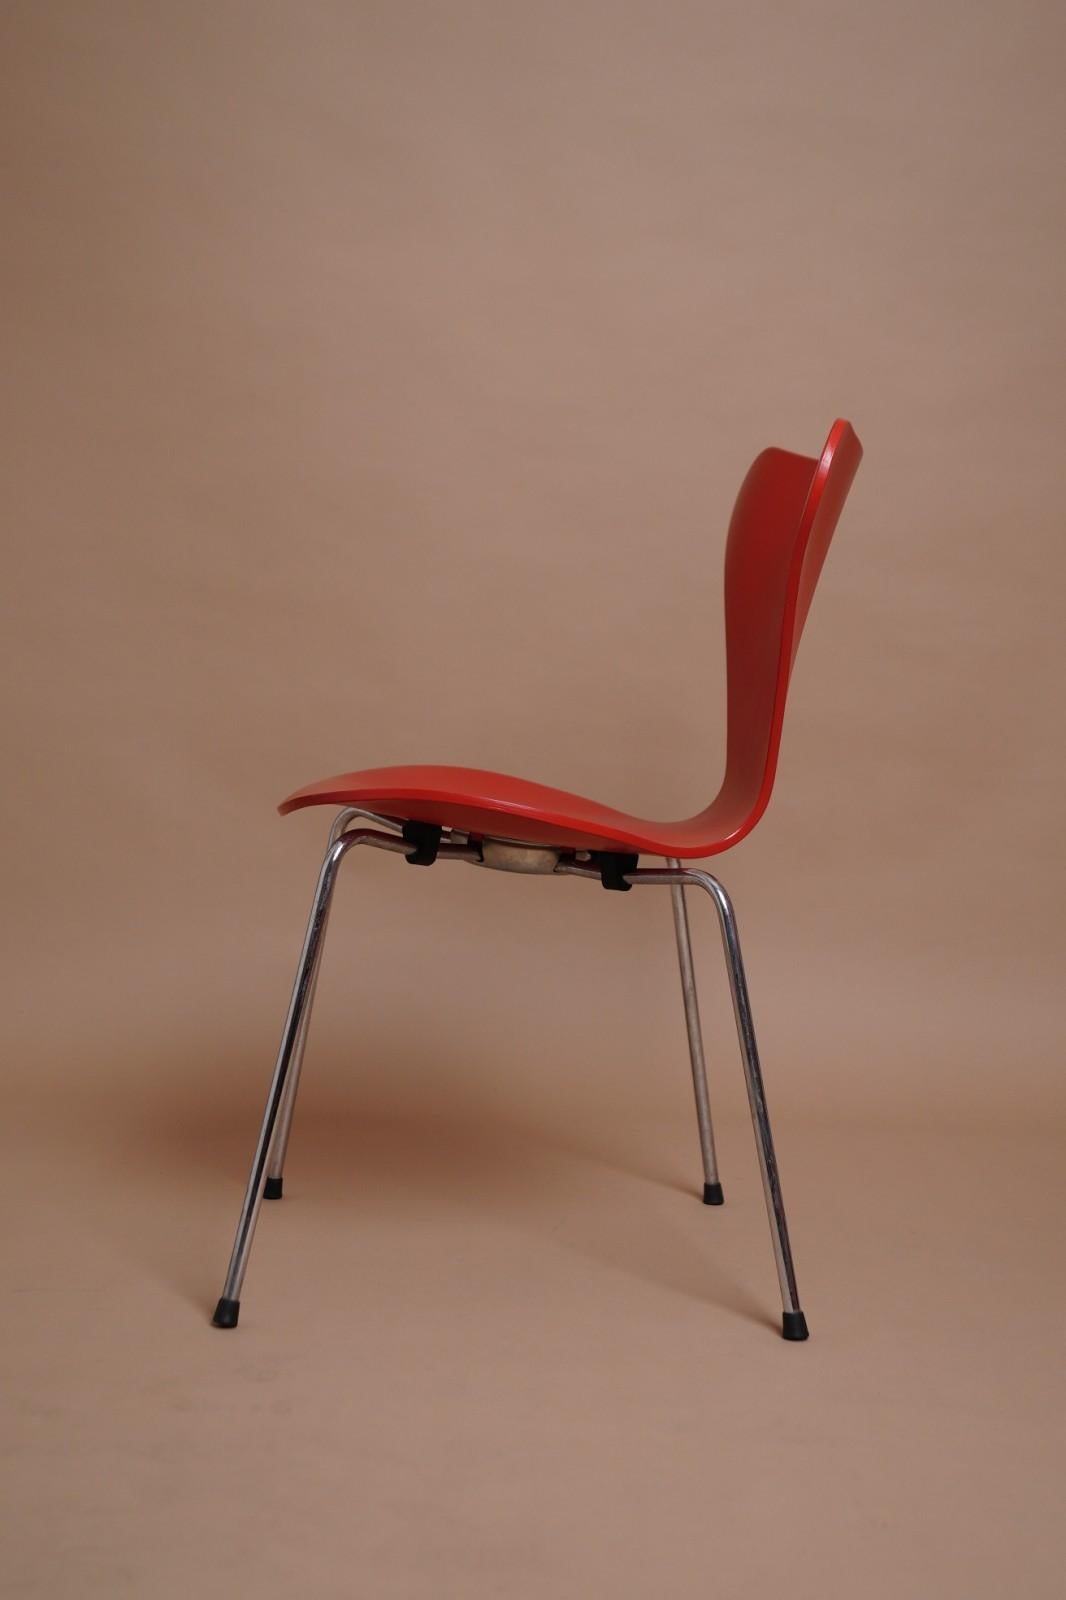 Chrome Series 7 By Arne Jacobsen chair  for Fritz Hansen 1960s For Sale